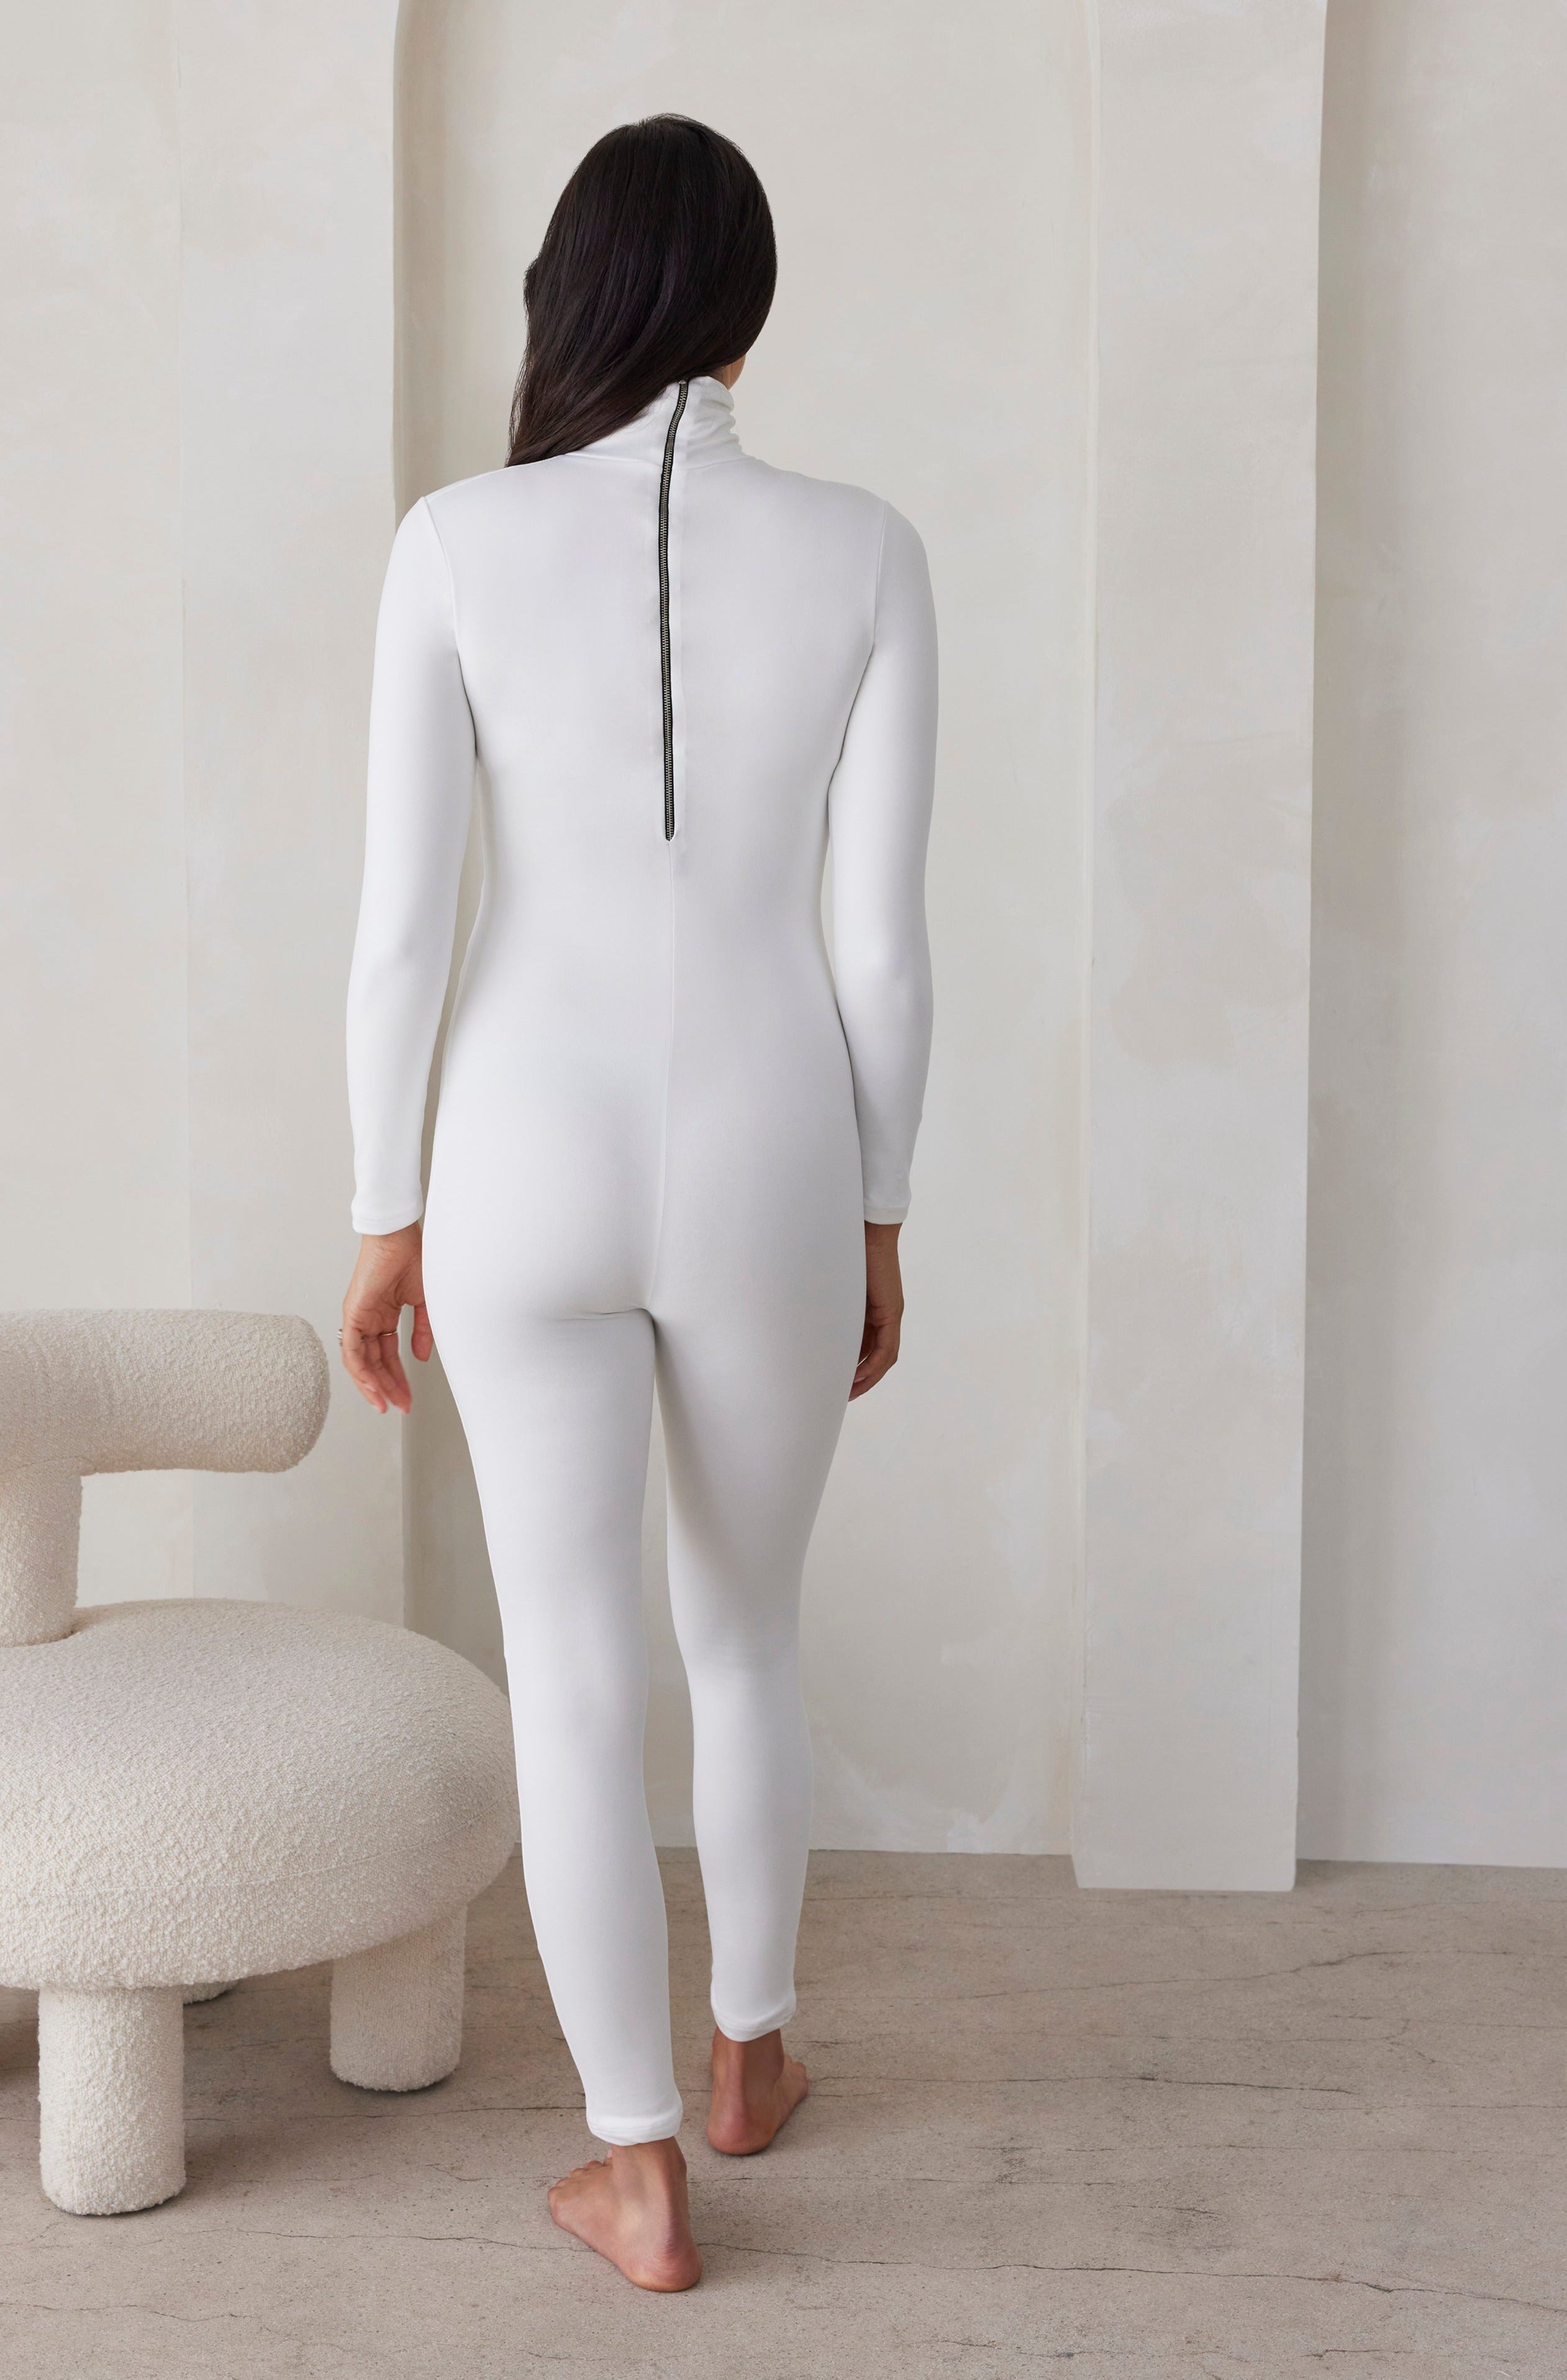 Shop The Penelope  Women's Turtleneck Bodysuit for Maternity